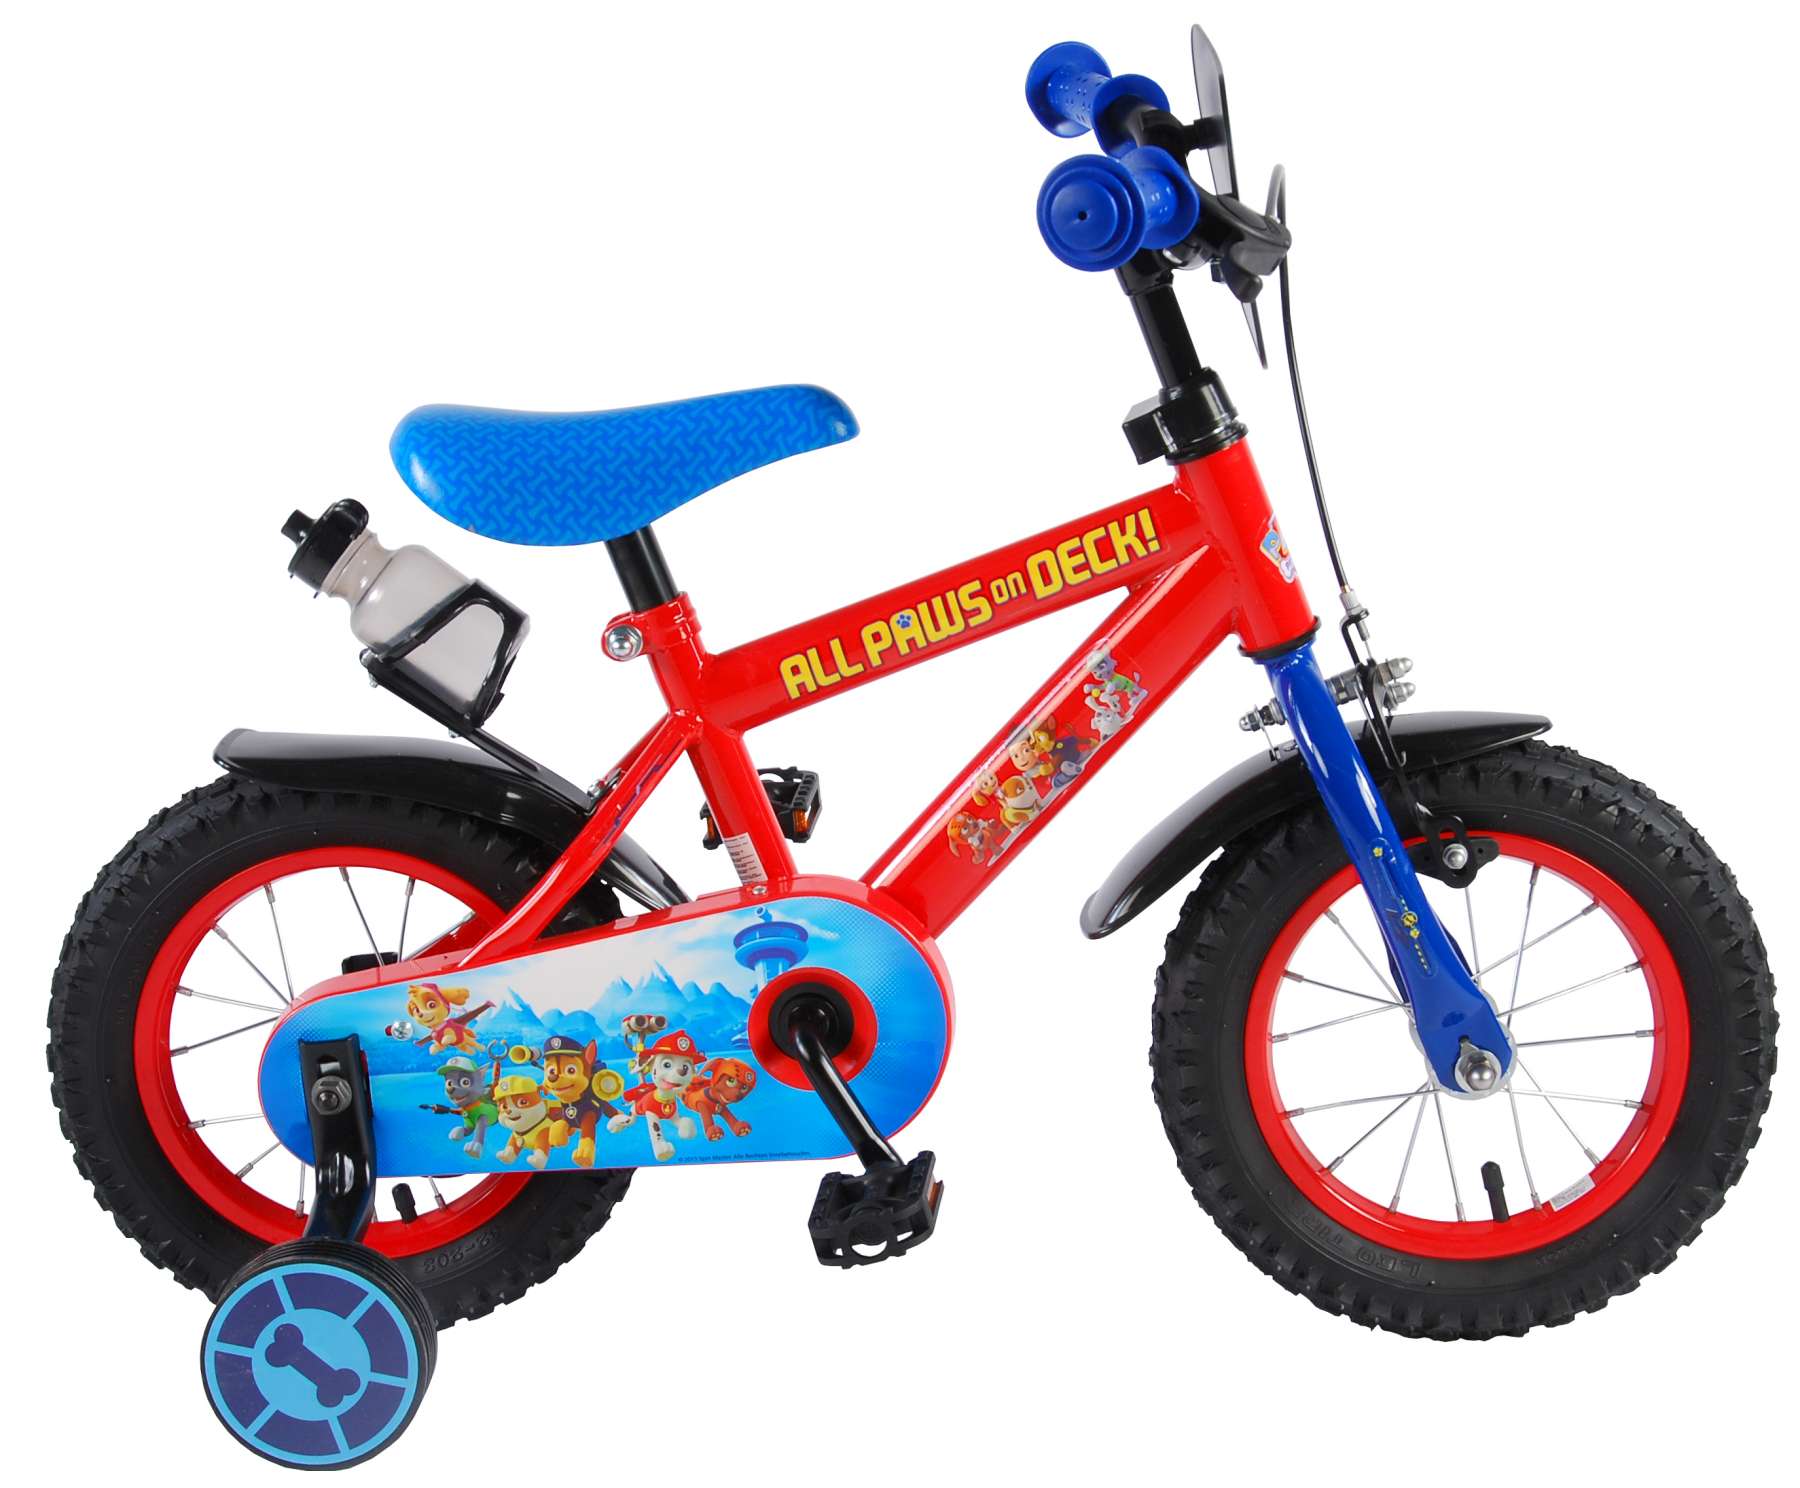 slutningen Om indstilling amplifikation Boys' Bikes :: Boys' Bikes 12 inch :: Paw Patrol Children's Bicycle - Boys  - 12 inch - Red / Blue - Kids' bikes - Lowest price guarantee - Free  delivery